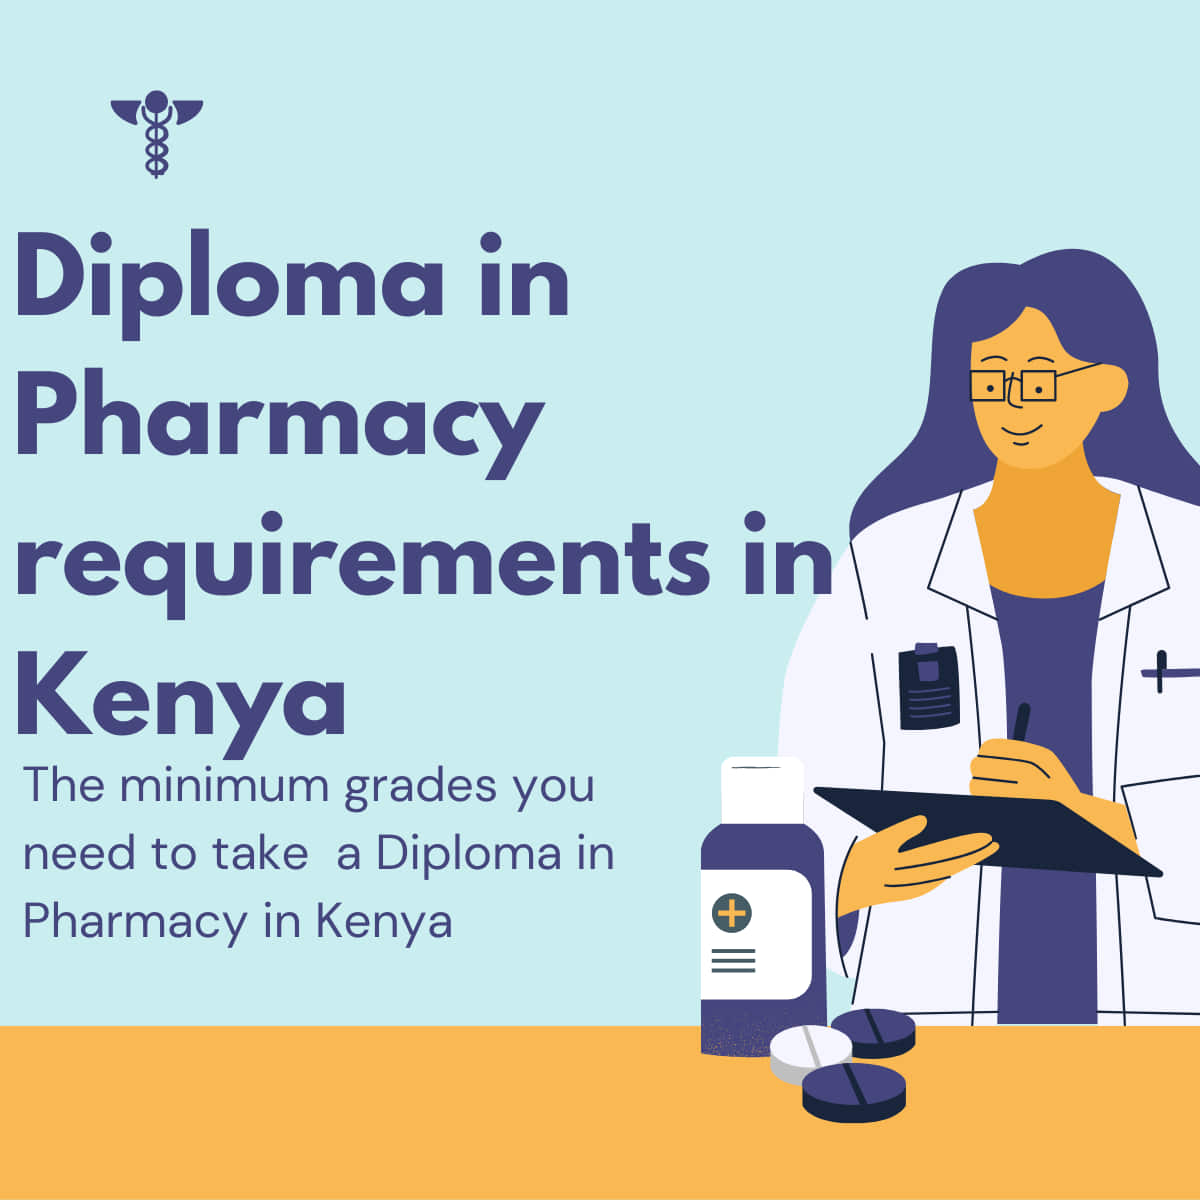 Diploma in pharmacy requirements in Kenya